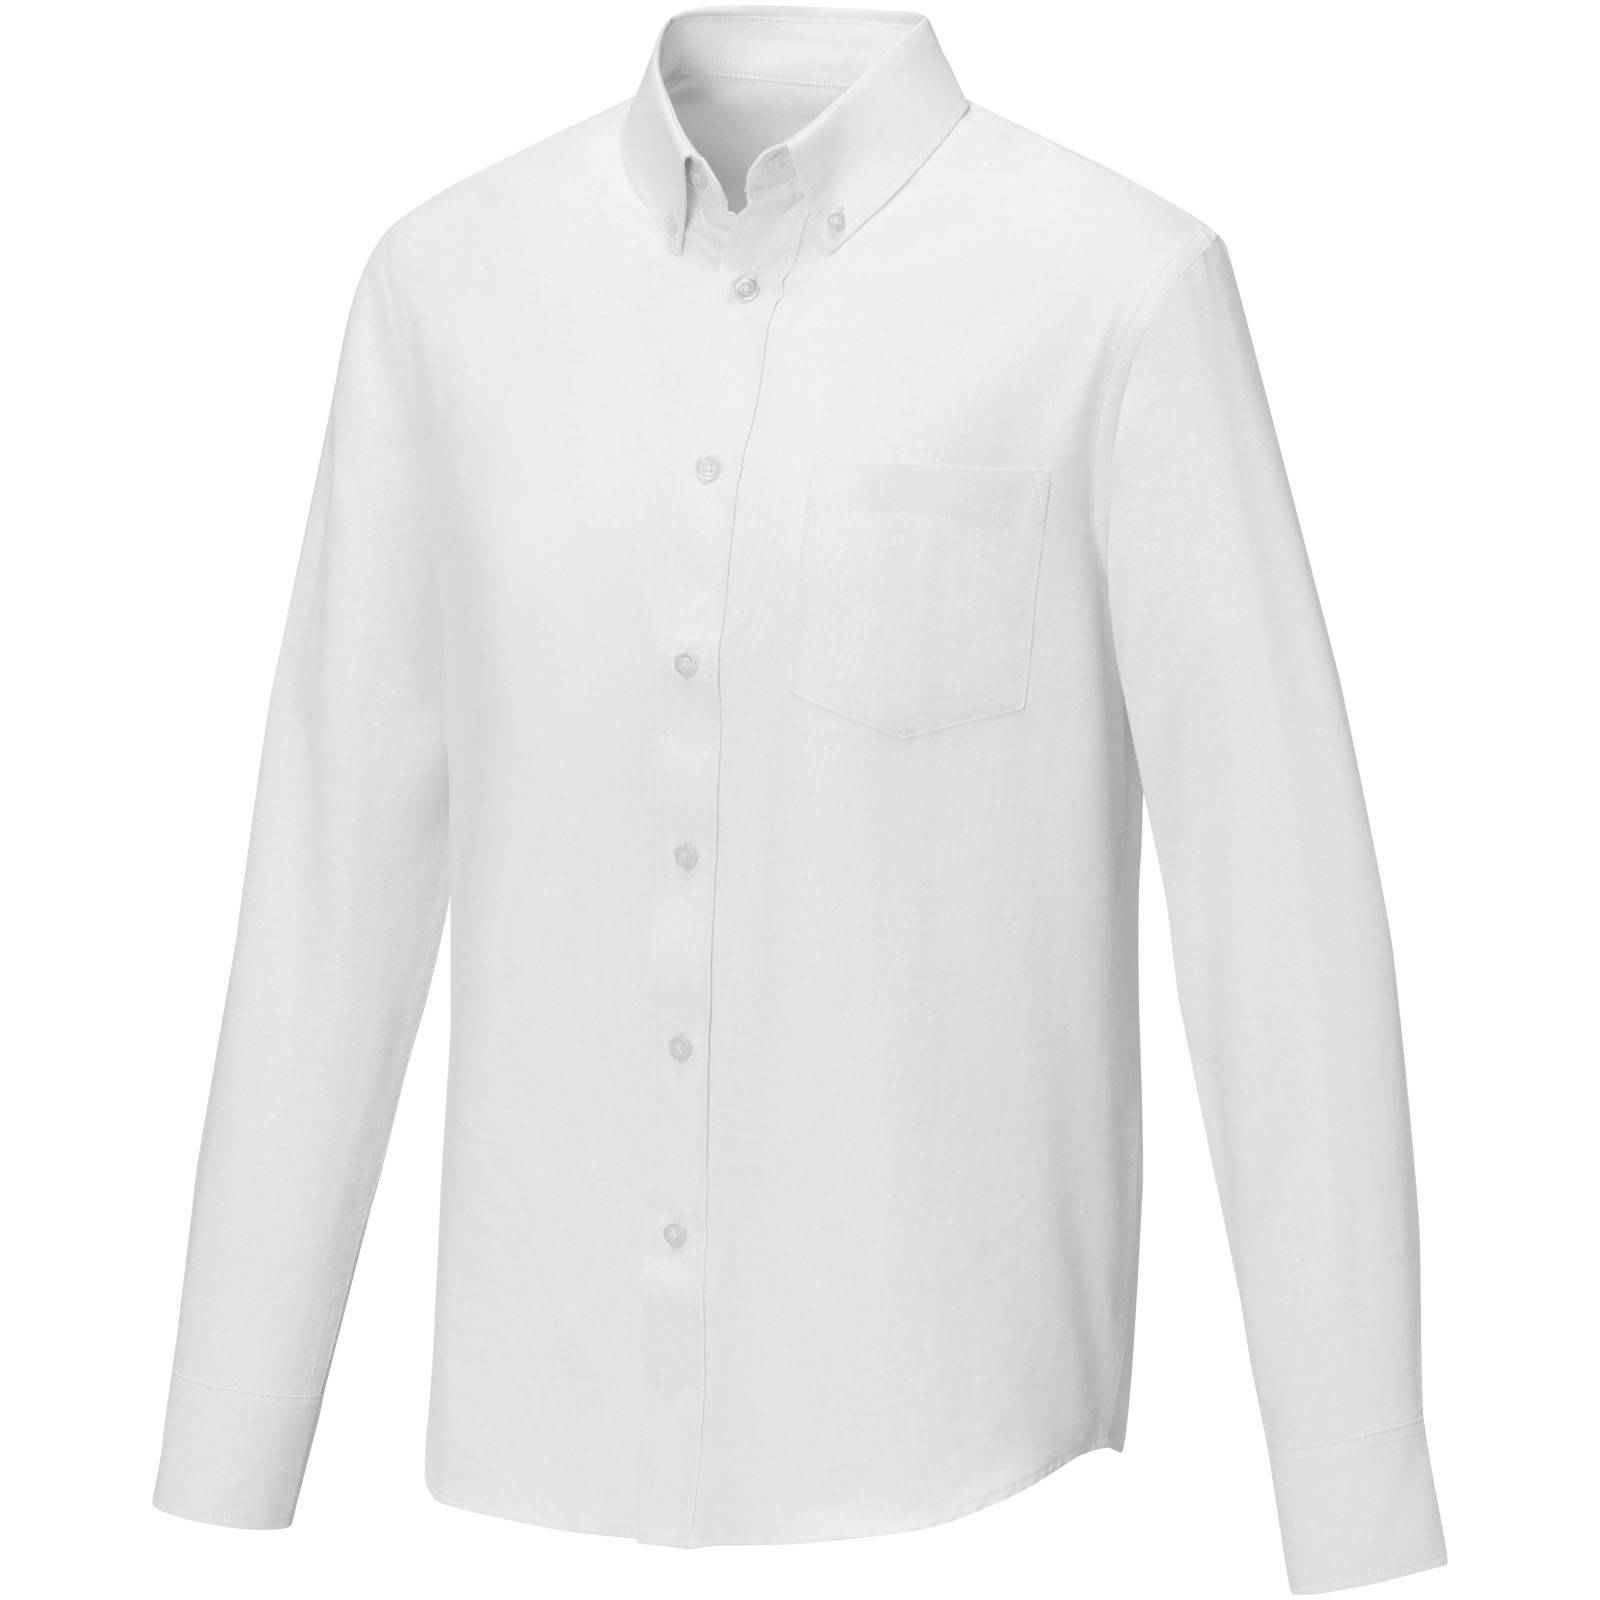 Clothing - Pollux long sleeve men's shirt